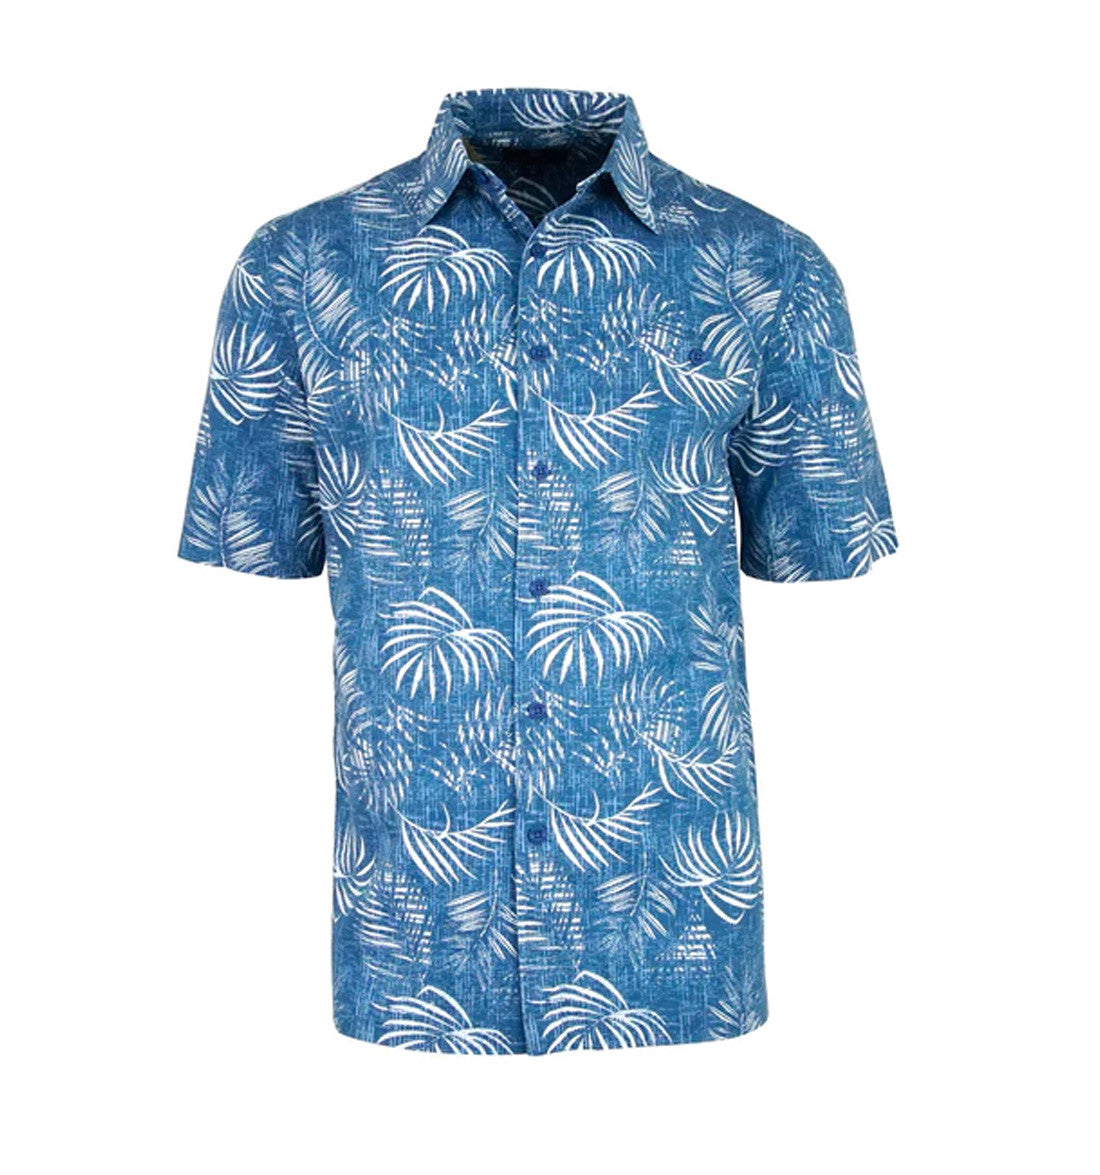 Palm Leaf Print Shirt by Weekender